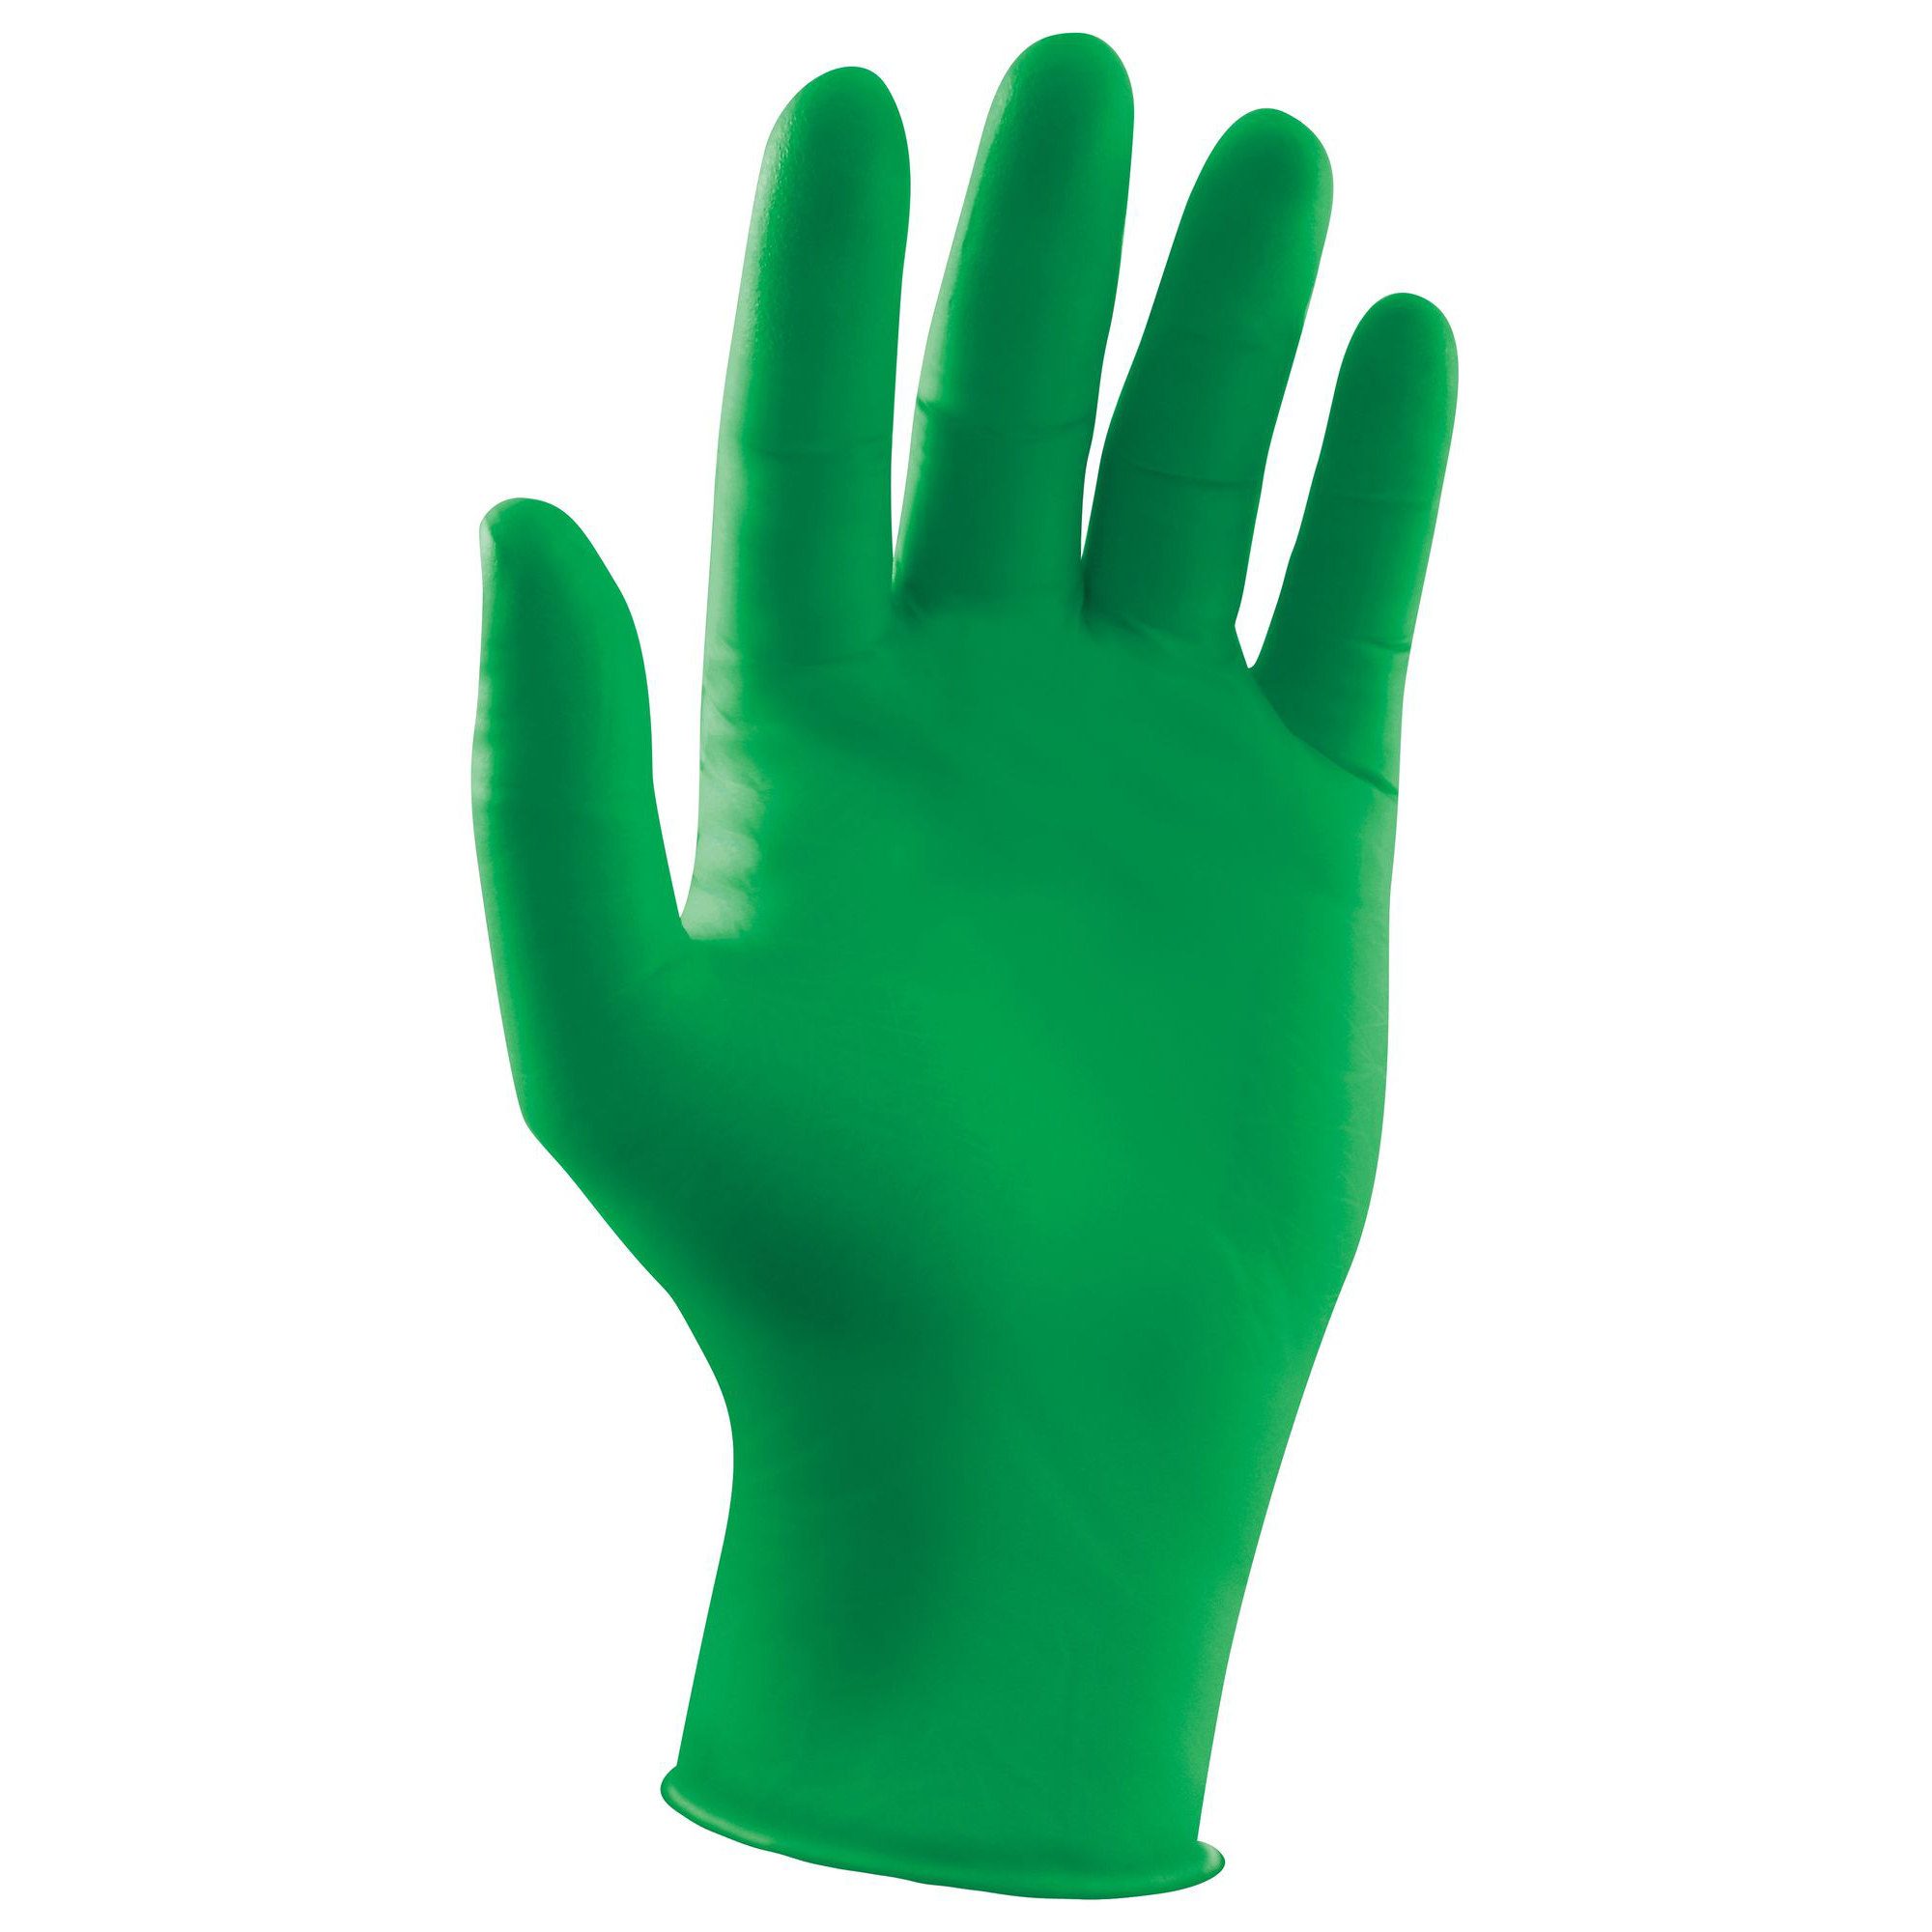 Nature Gloves by MED-COMFORT - umweltschonende, biologisch abbaubare Nitril-Untersuchungshandschuhe. Größe XS-XL.